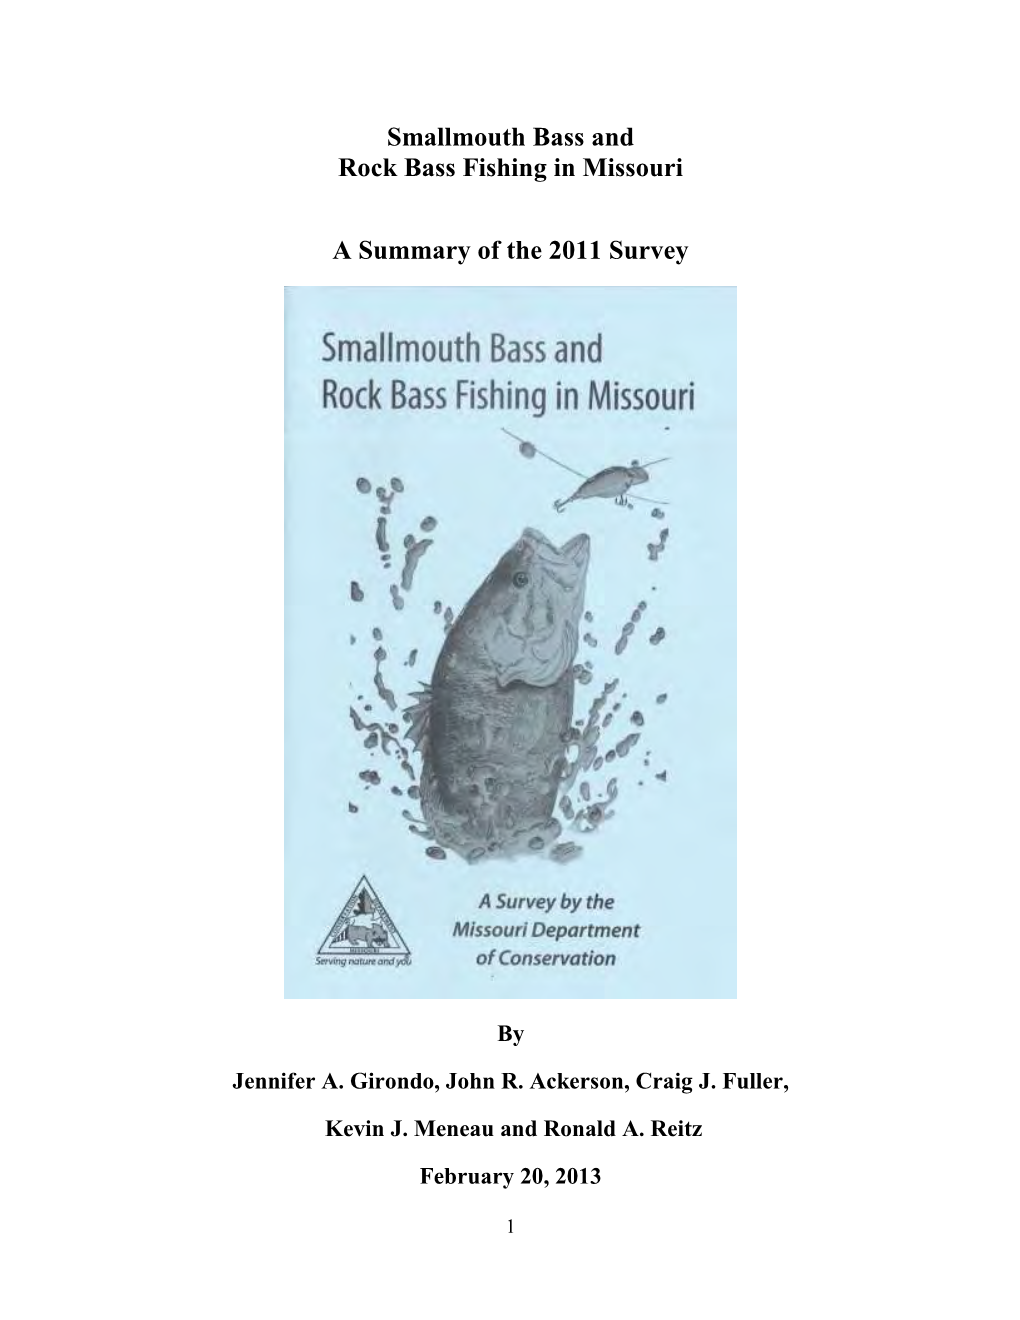 Smallmouth Bass and Rock Bass Fishing Survey